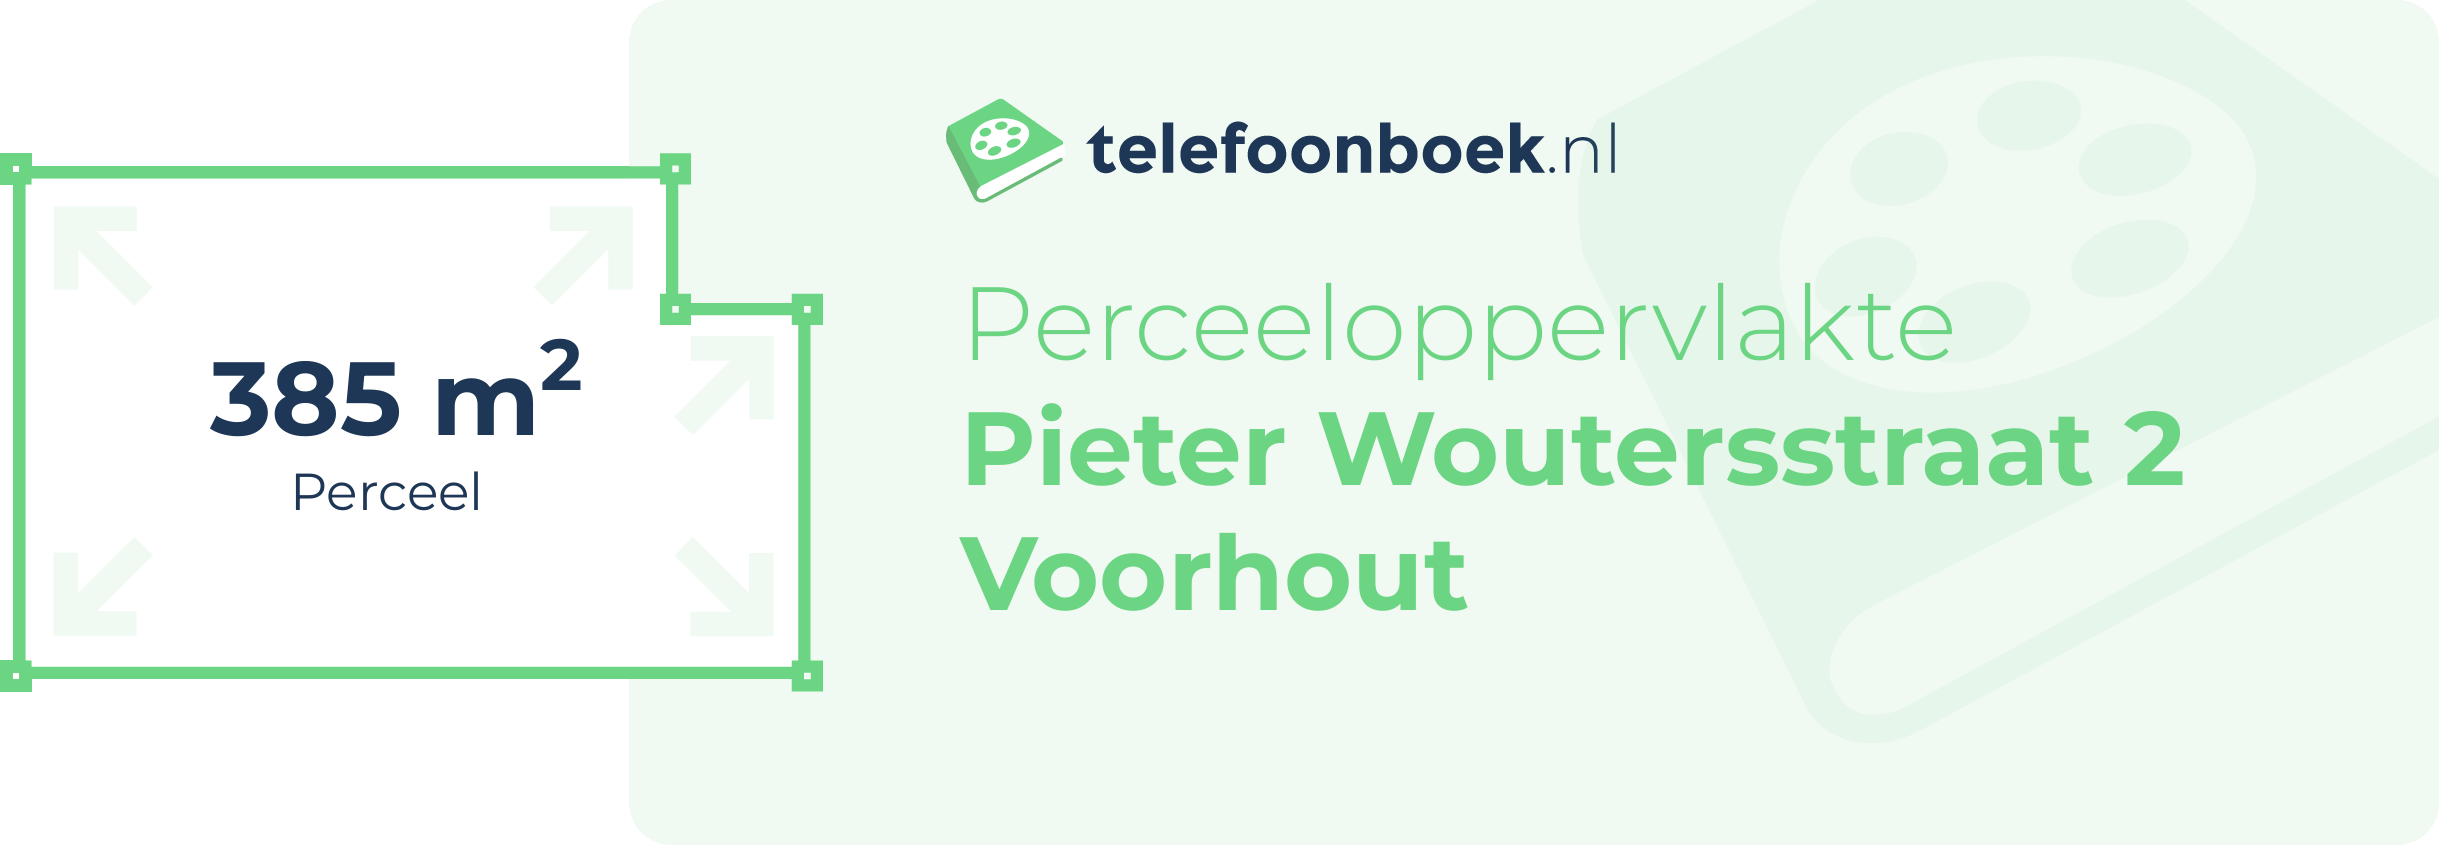 Perceeloppervlakte Pieter Woutersstraat 2 Voorhout